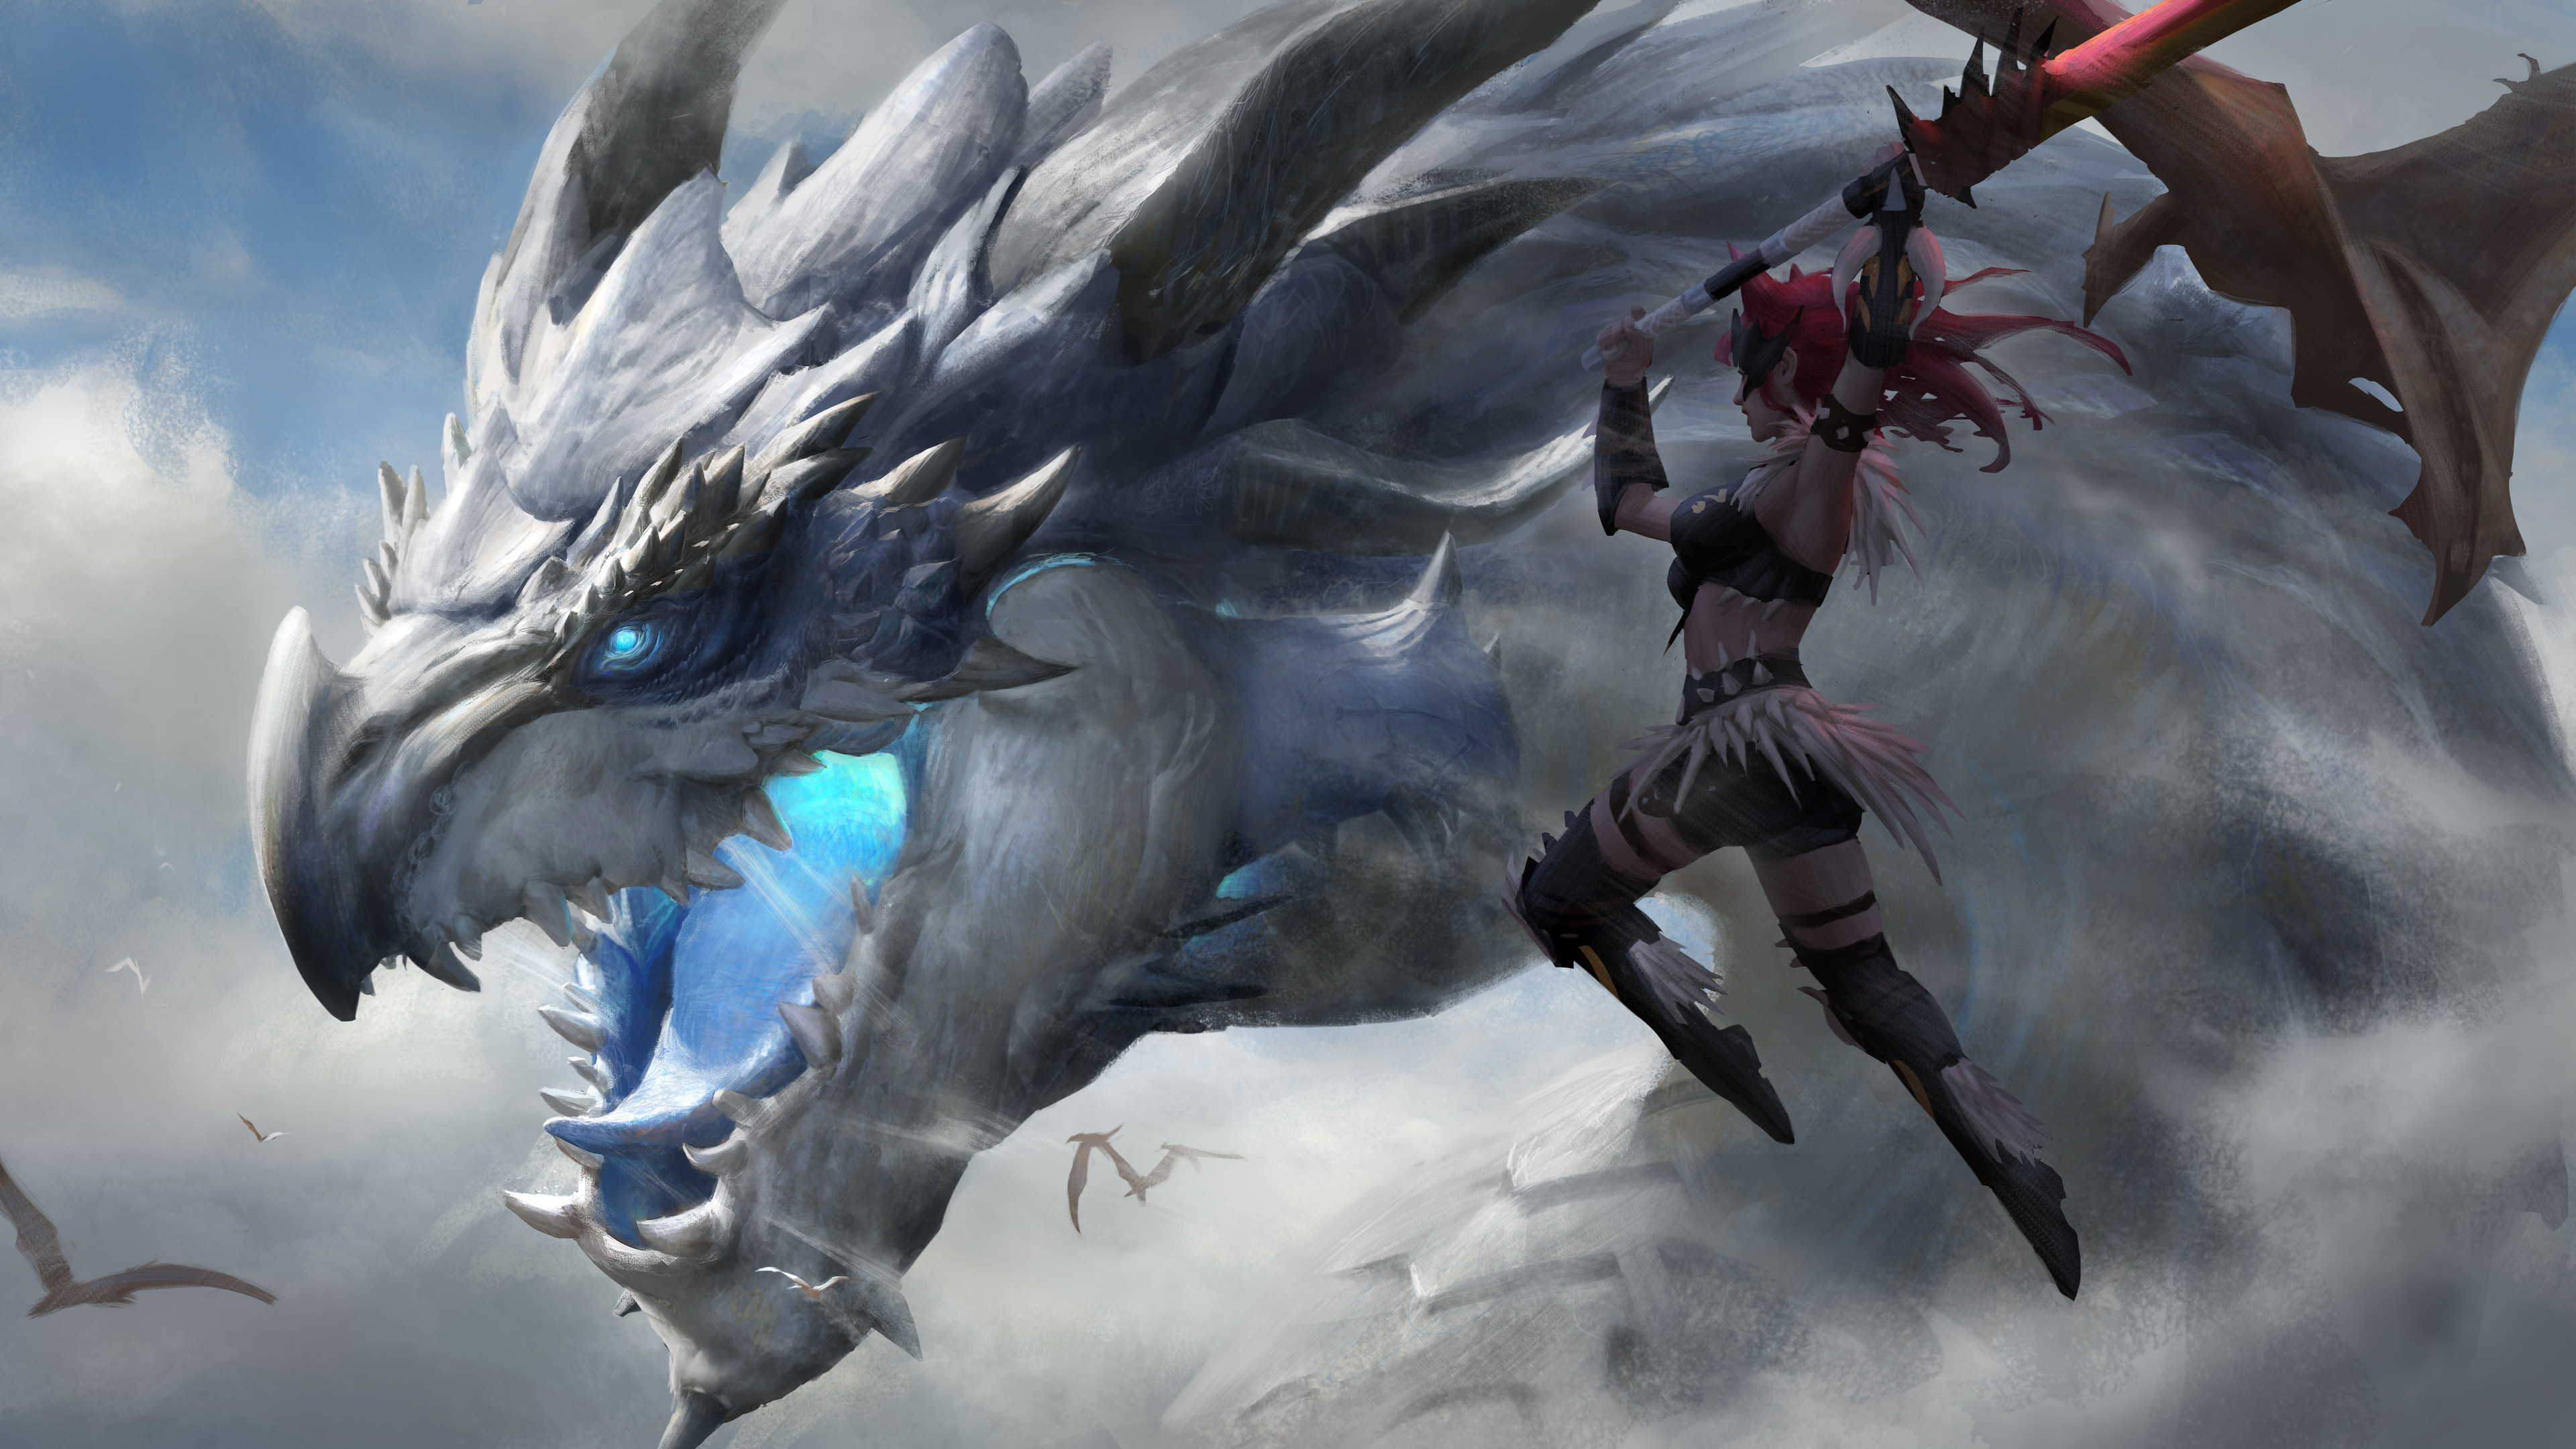 General 3840x2160 Yuhong Ding digital art artwork drawing fictional dragon female warrior